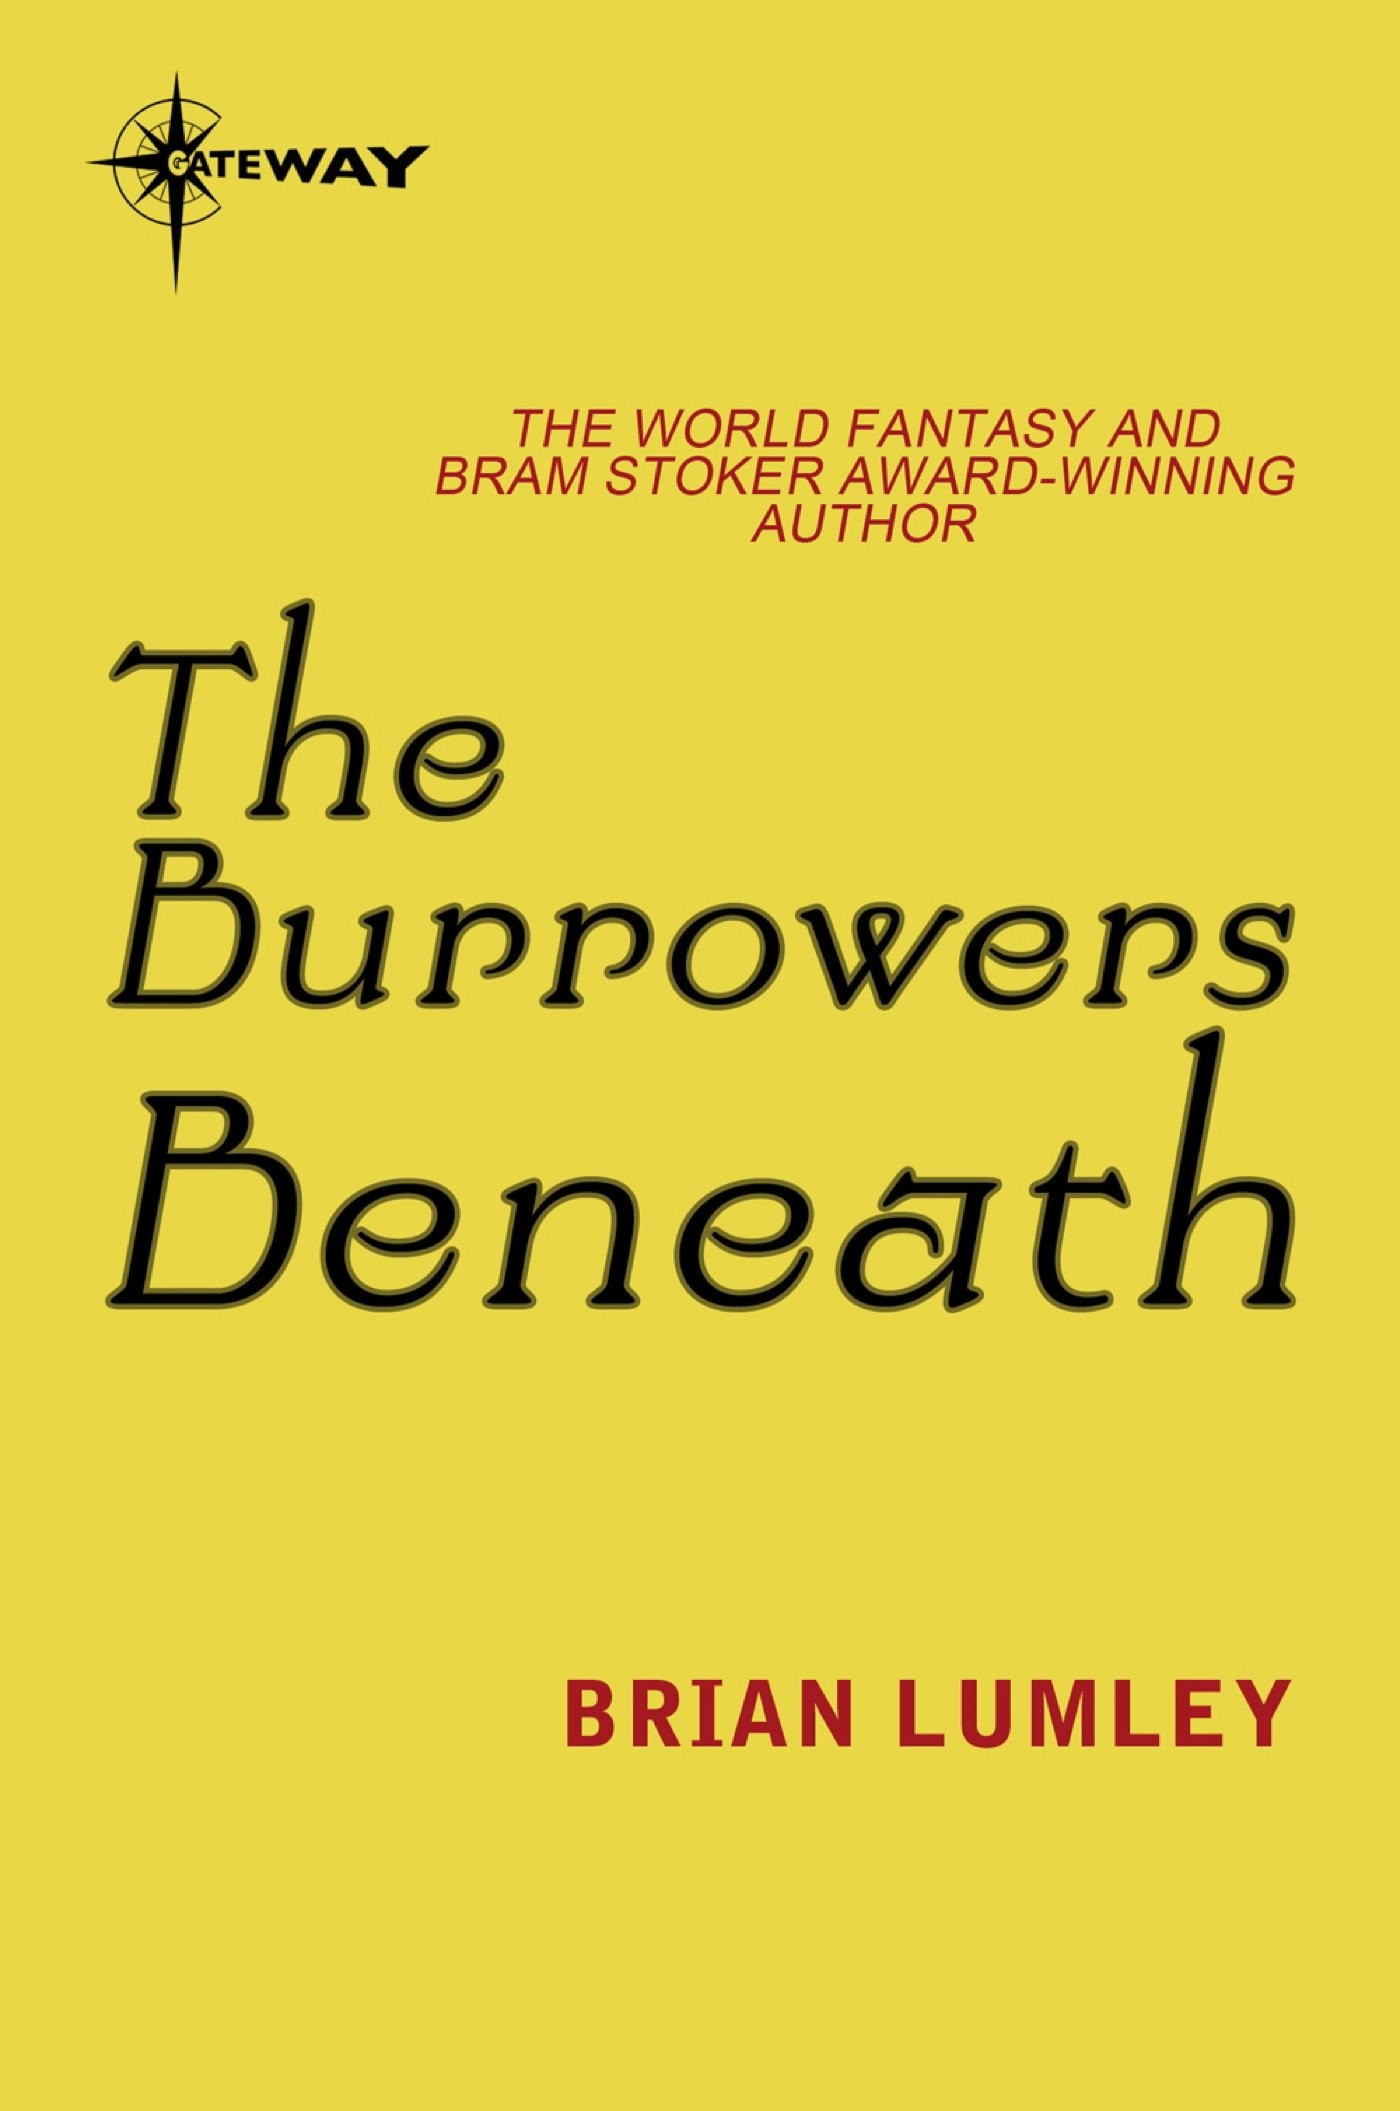 The Burrowers Beneath (Titus Crow Book 1)